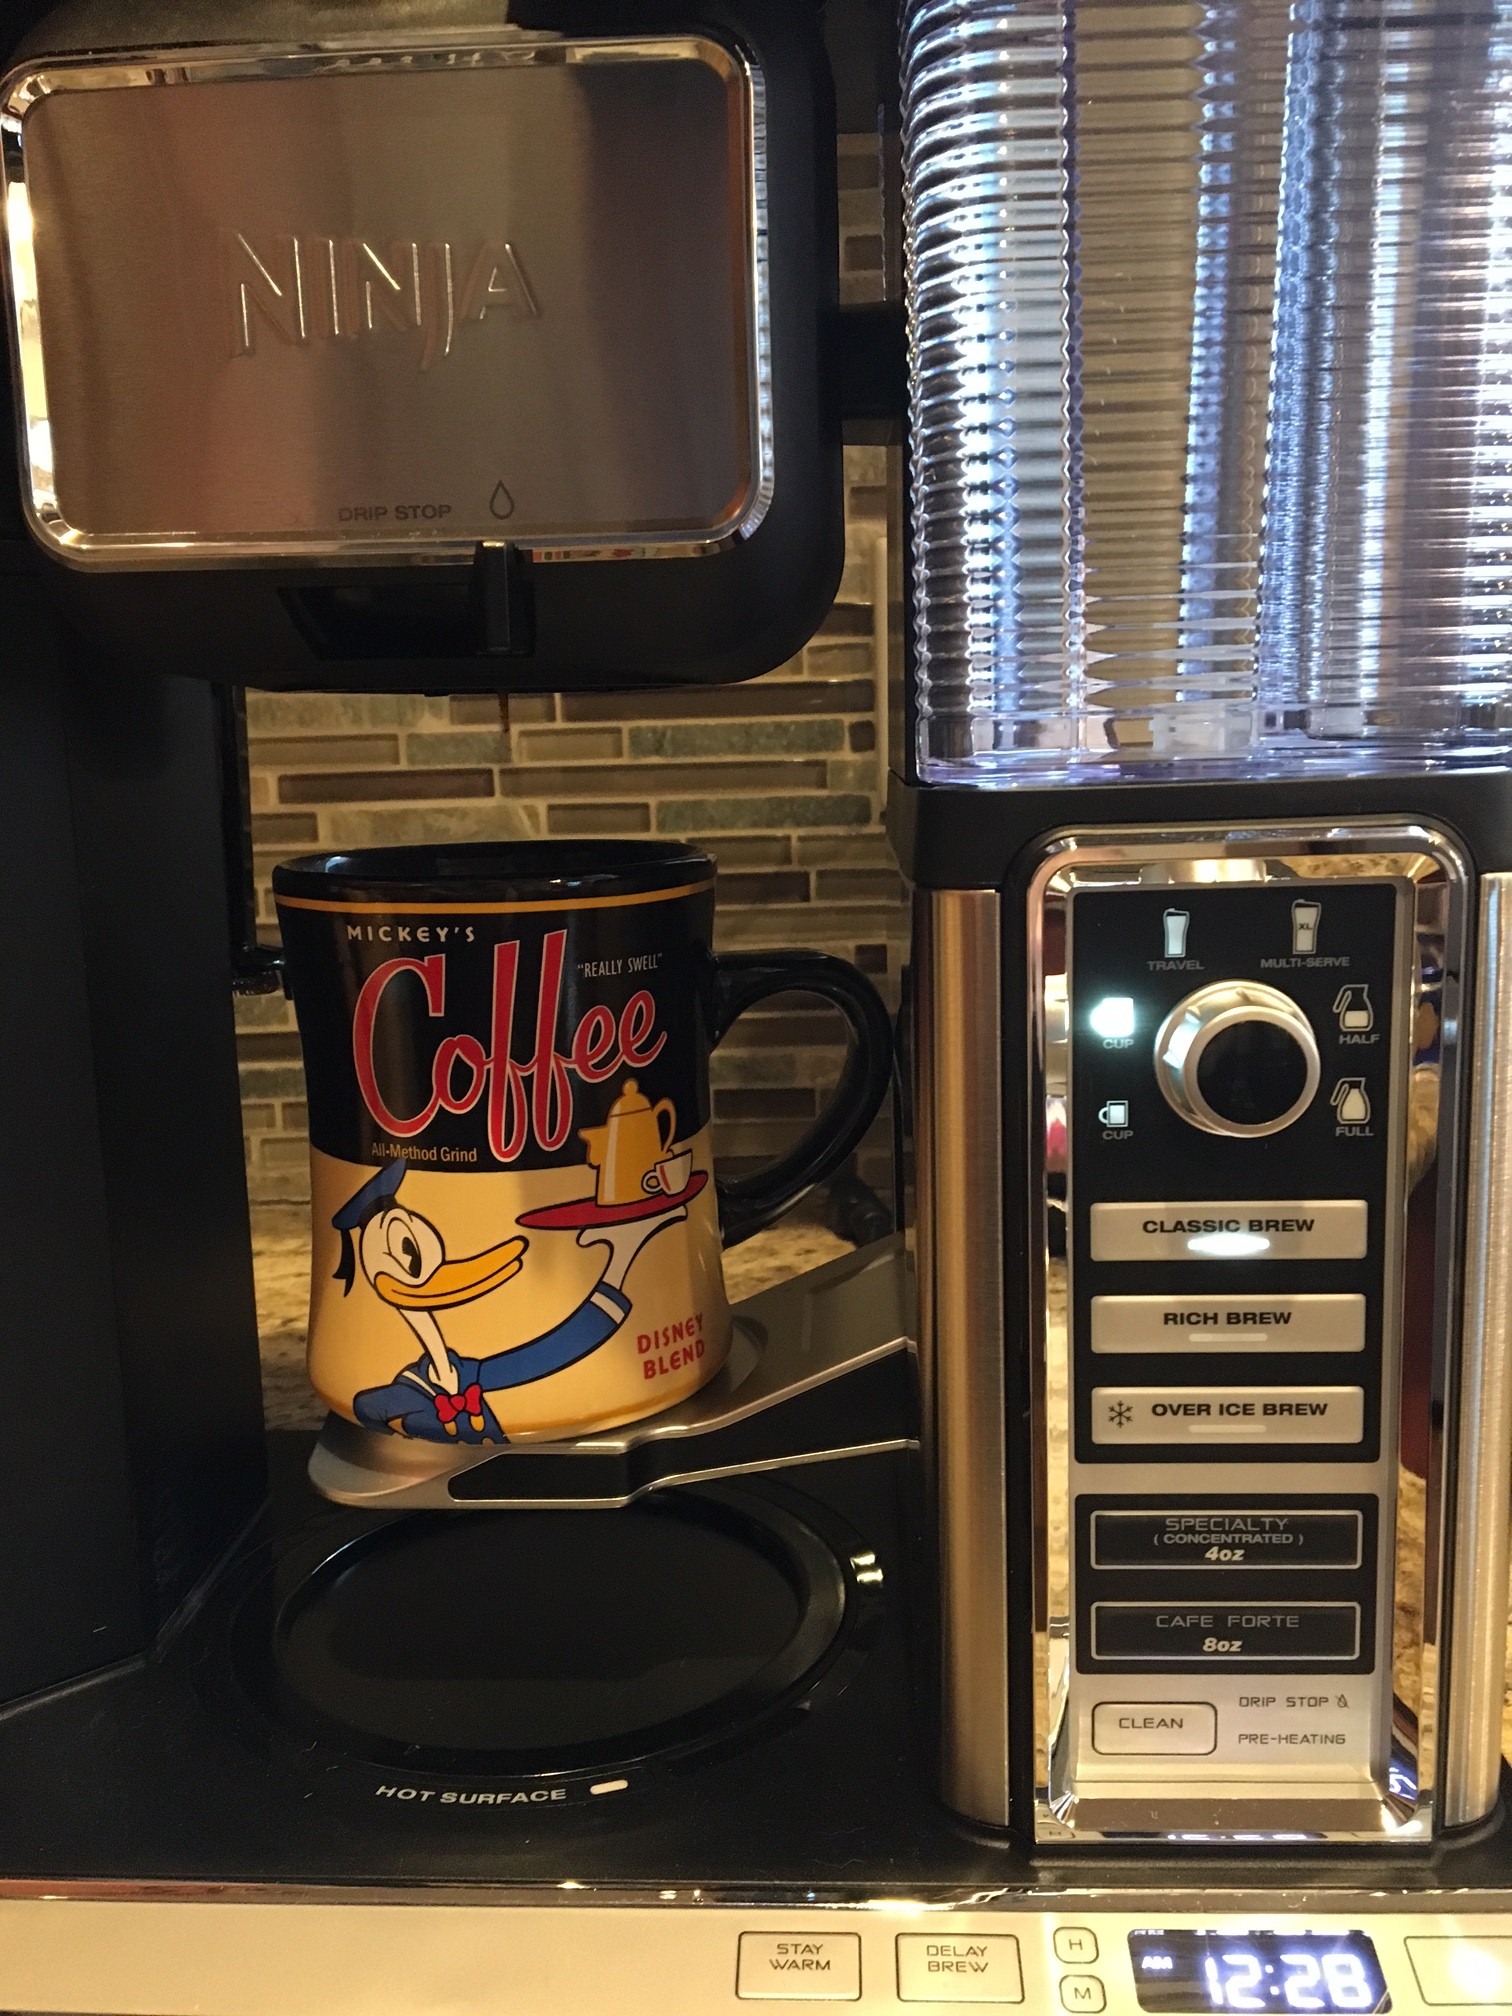 The Ninja Coffee Bar - All Things Coffee, All the Time